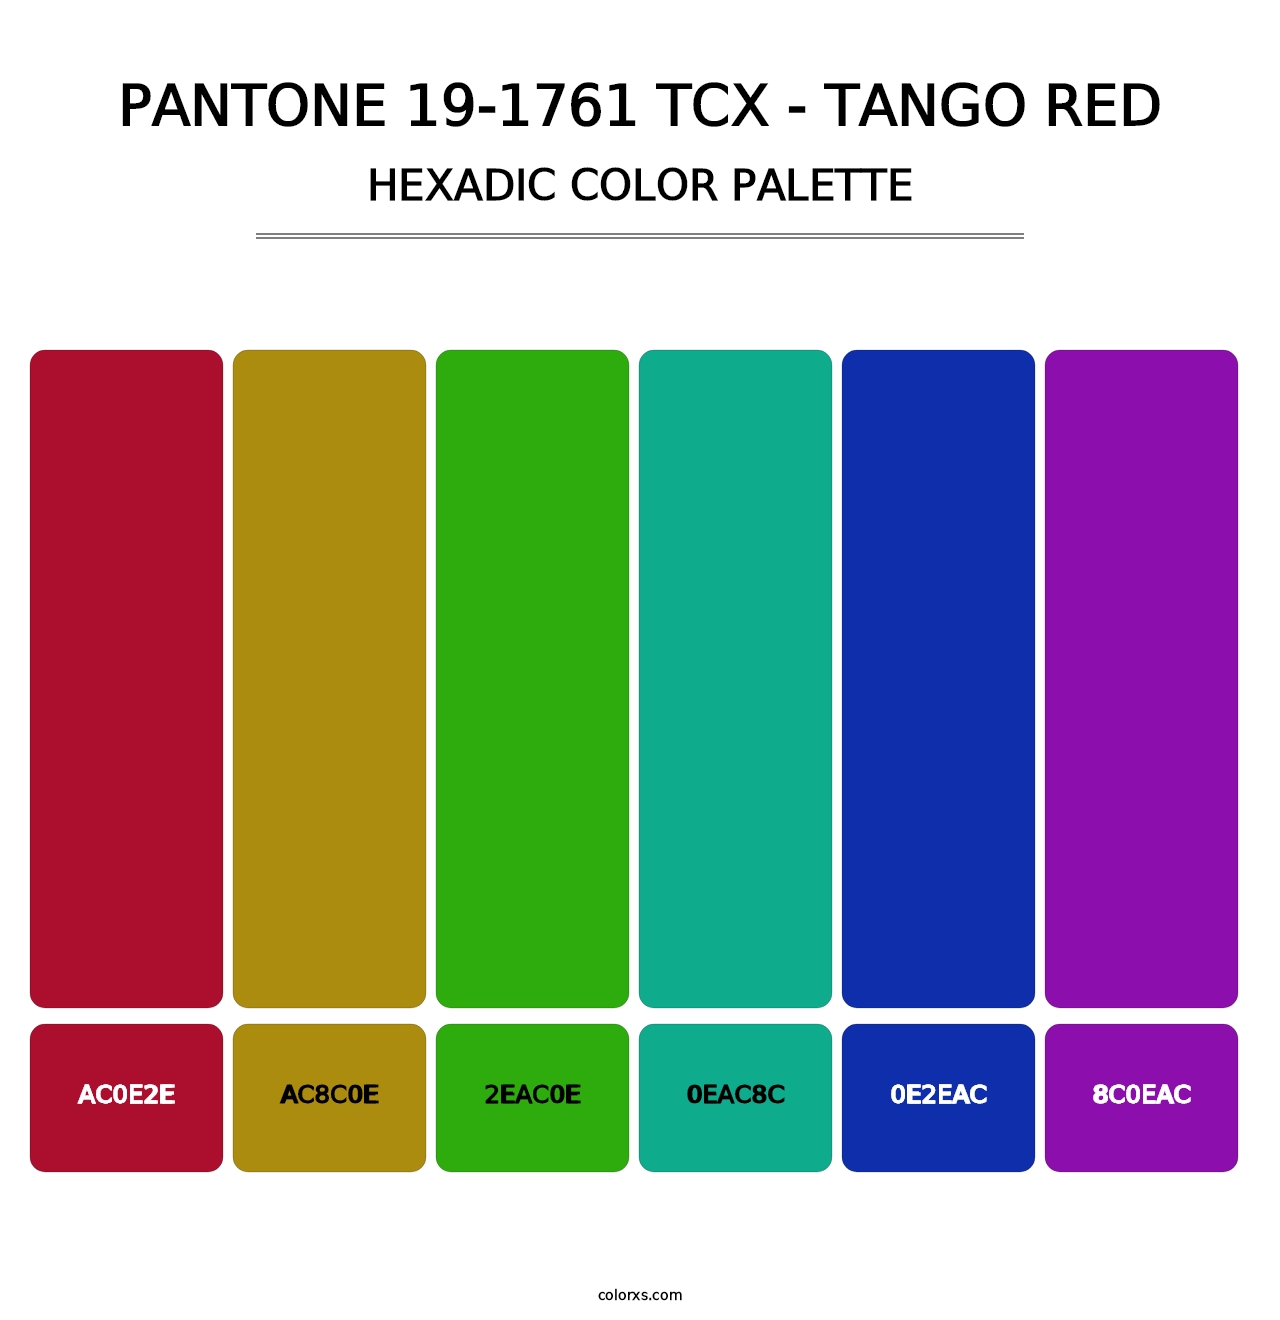 PANTONE 19-1761 TCX - Tango Red - Hexadic Color Palette